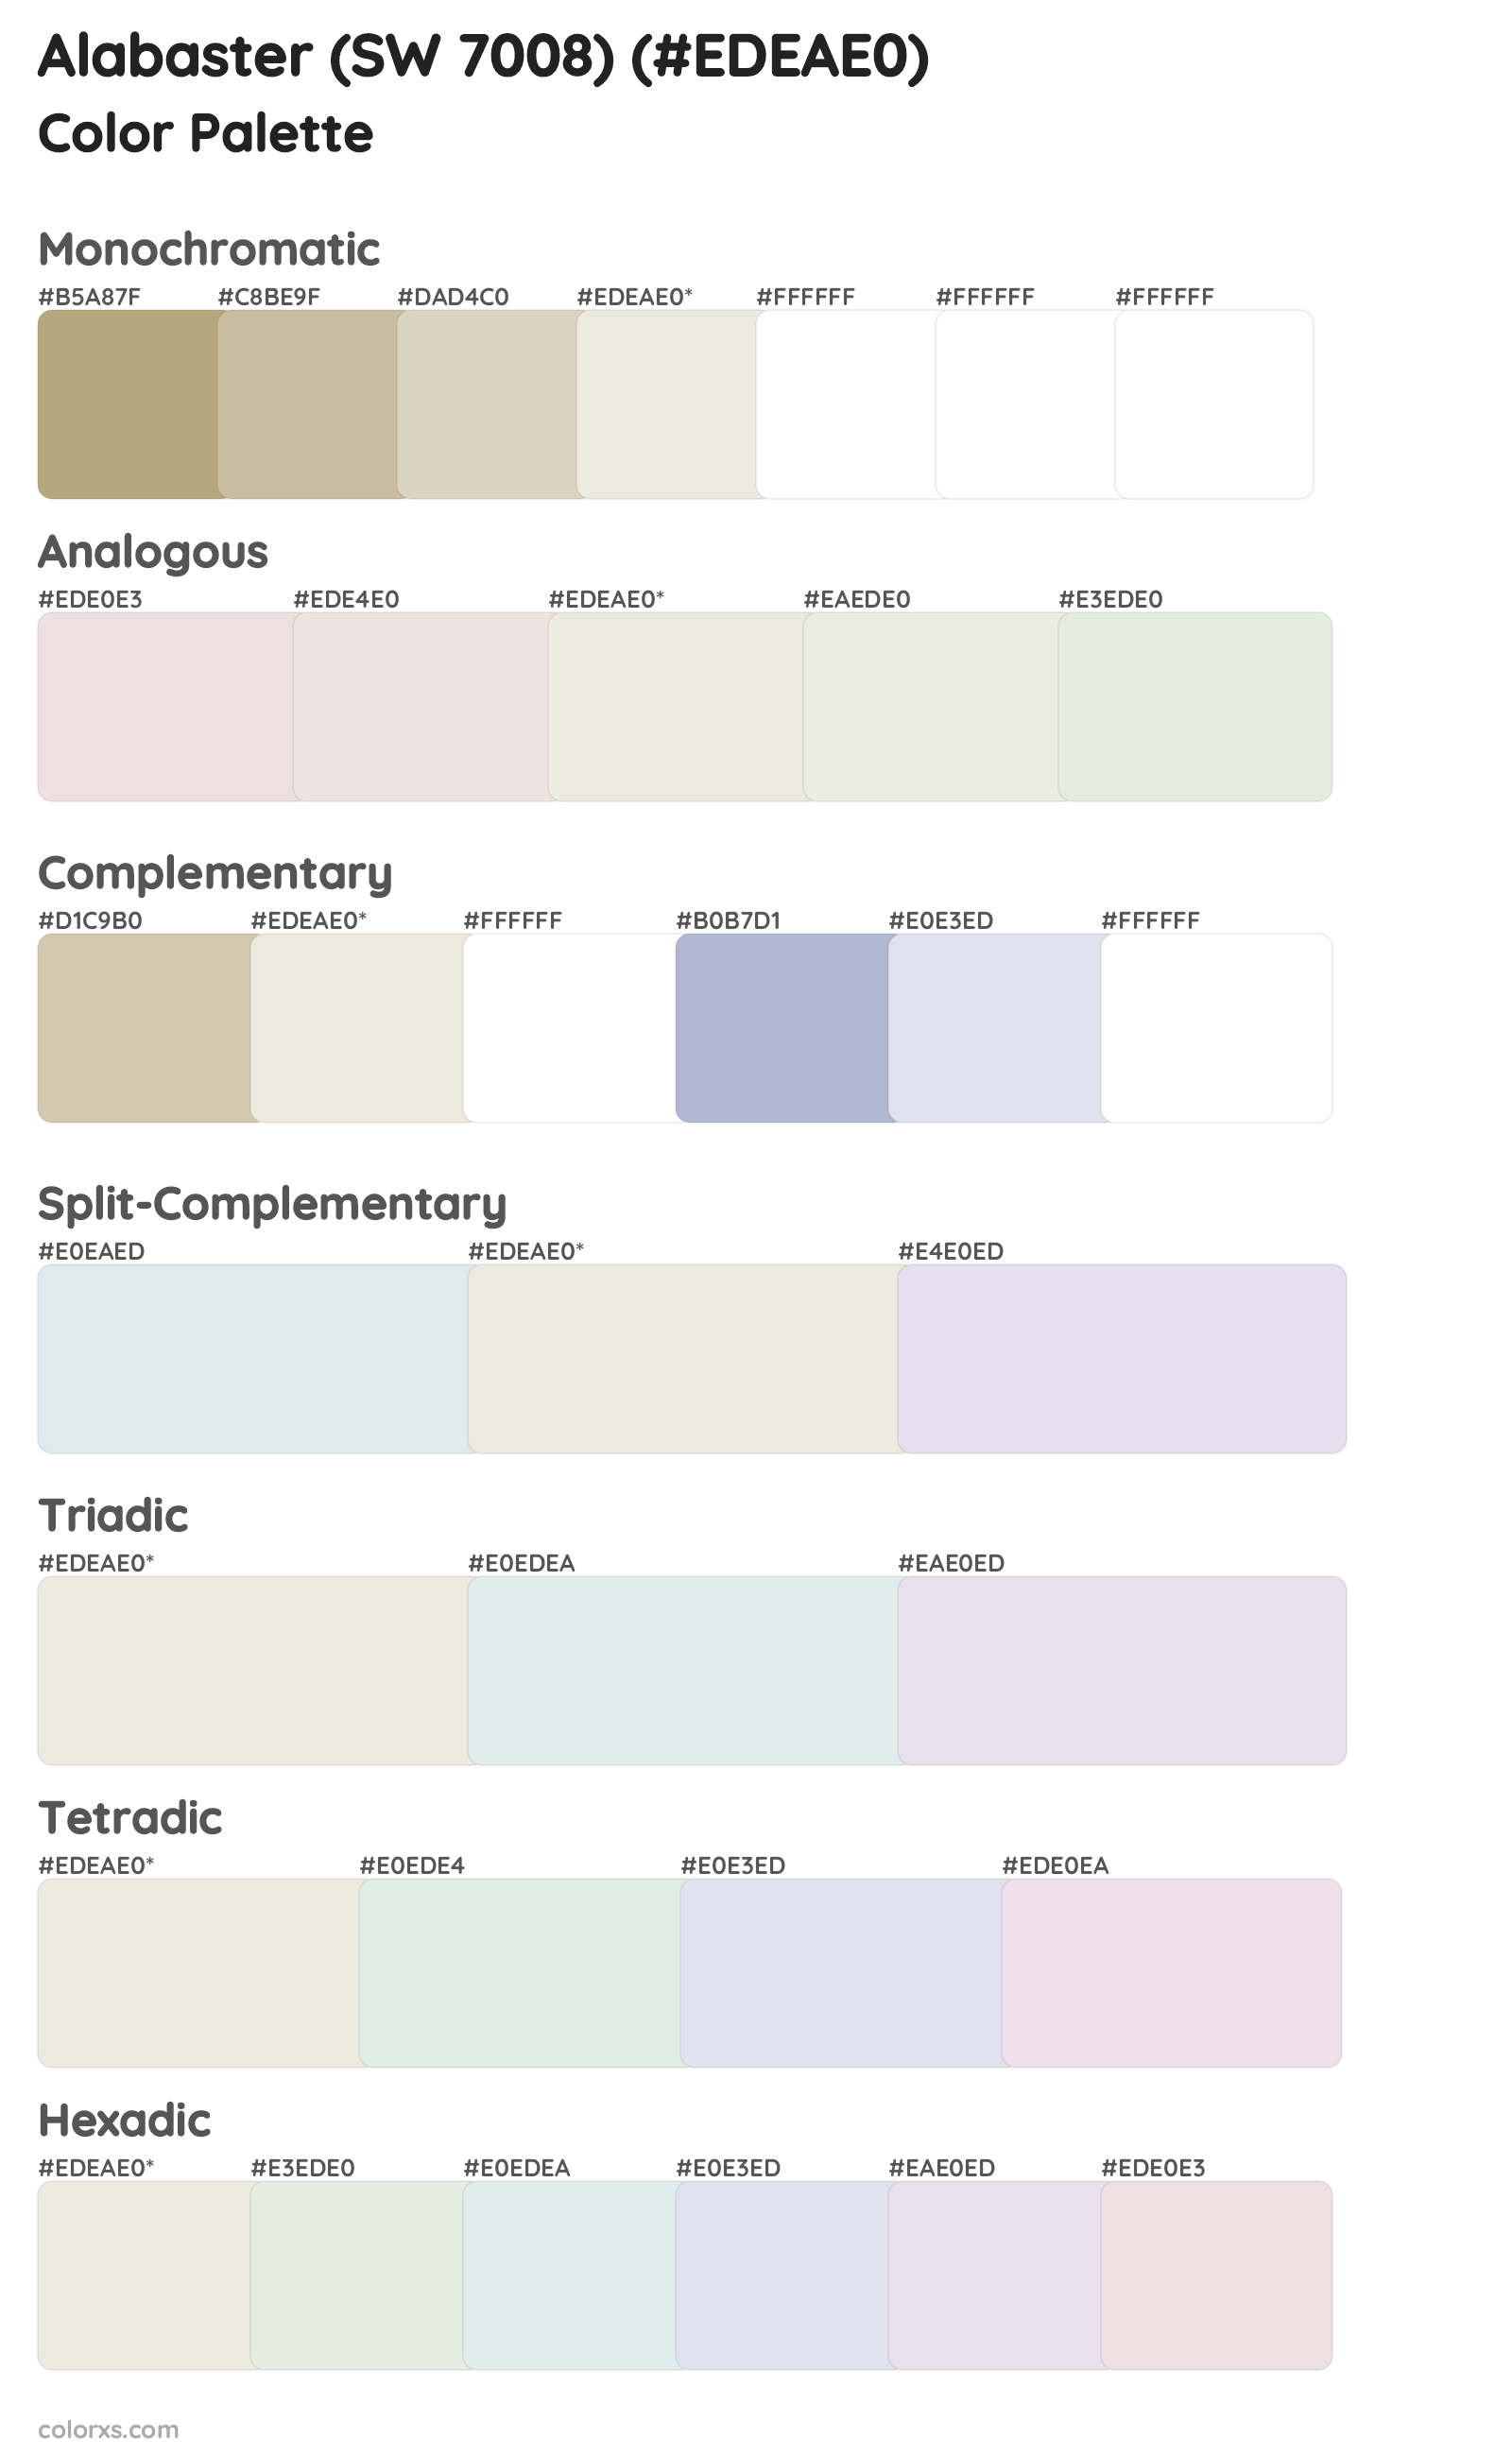 Alabaster (SW 7008) Color Scheme Palettes